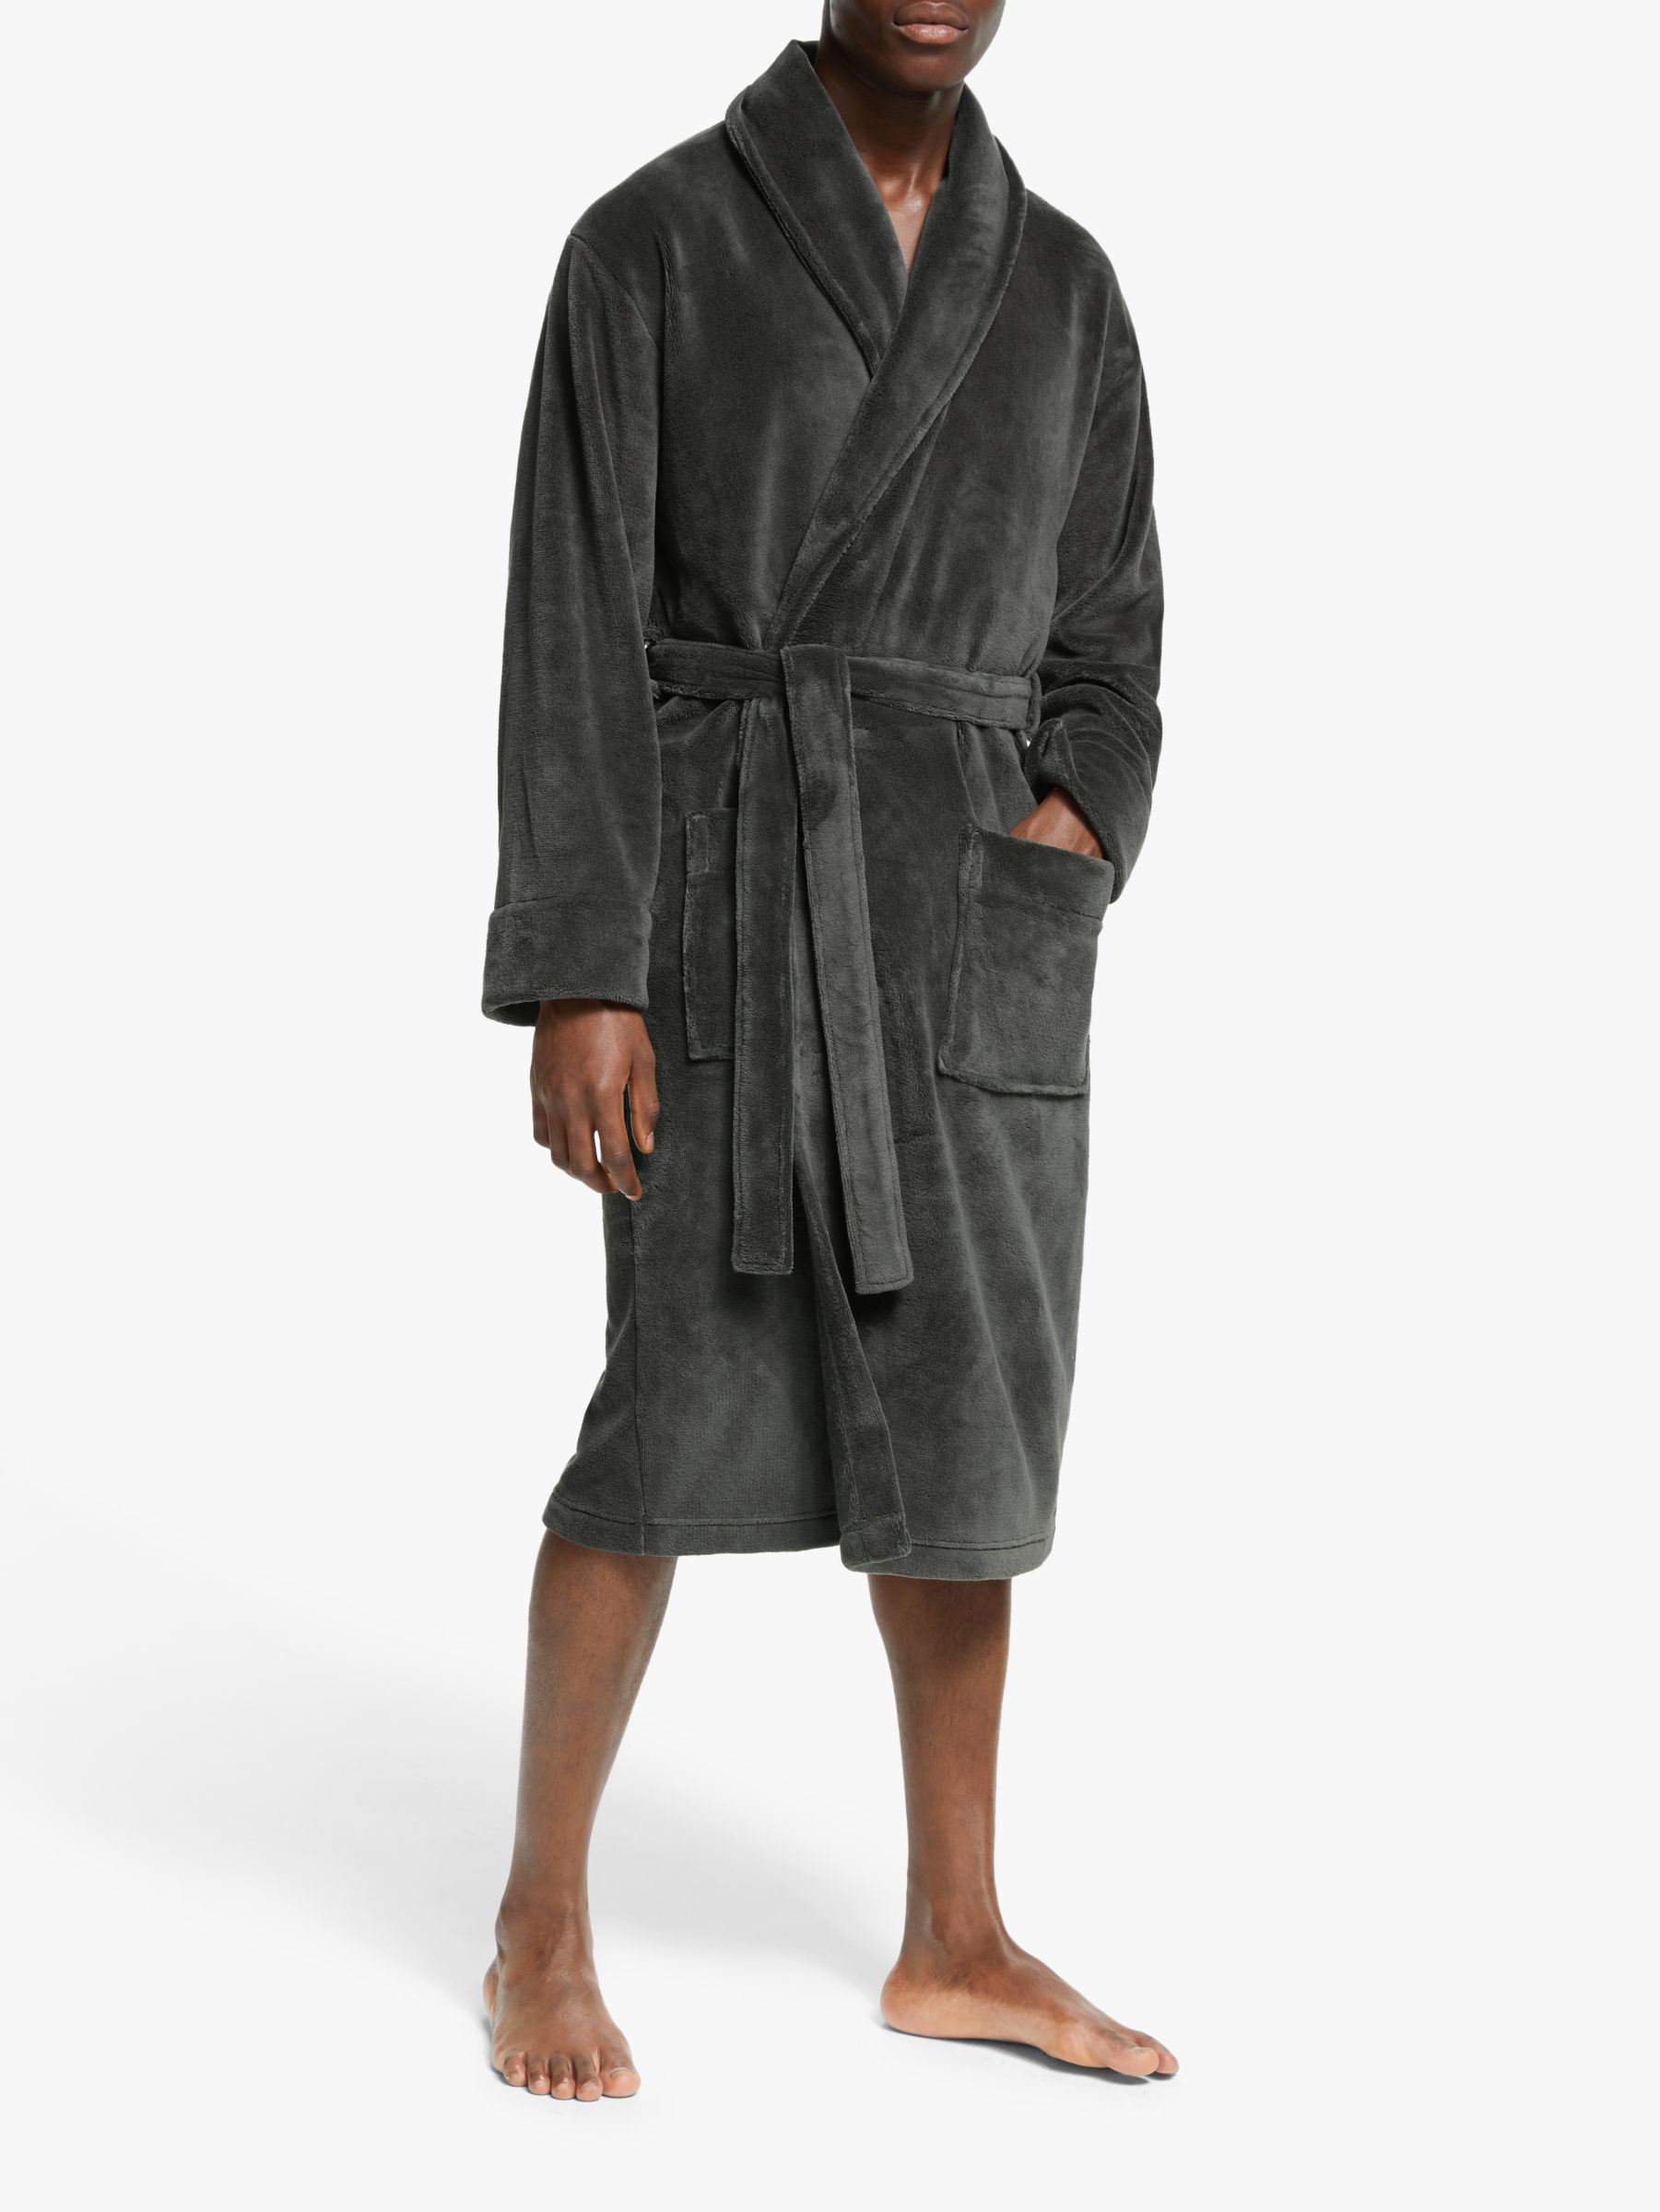 John Lewis & Partners Sheared Fleece Robe, Grey, S